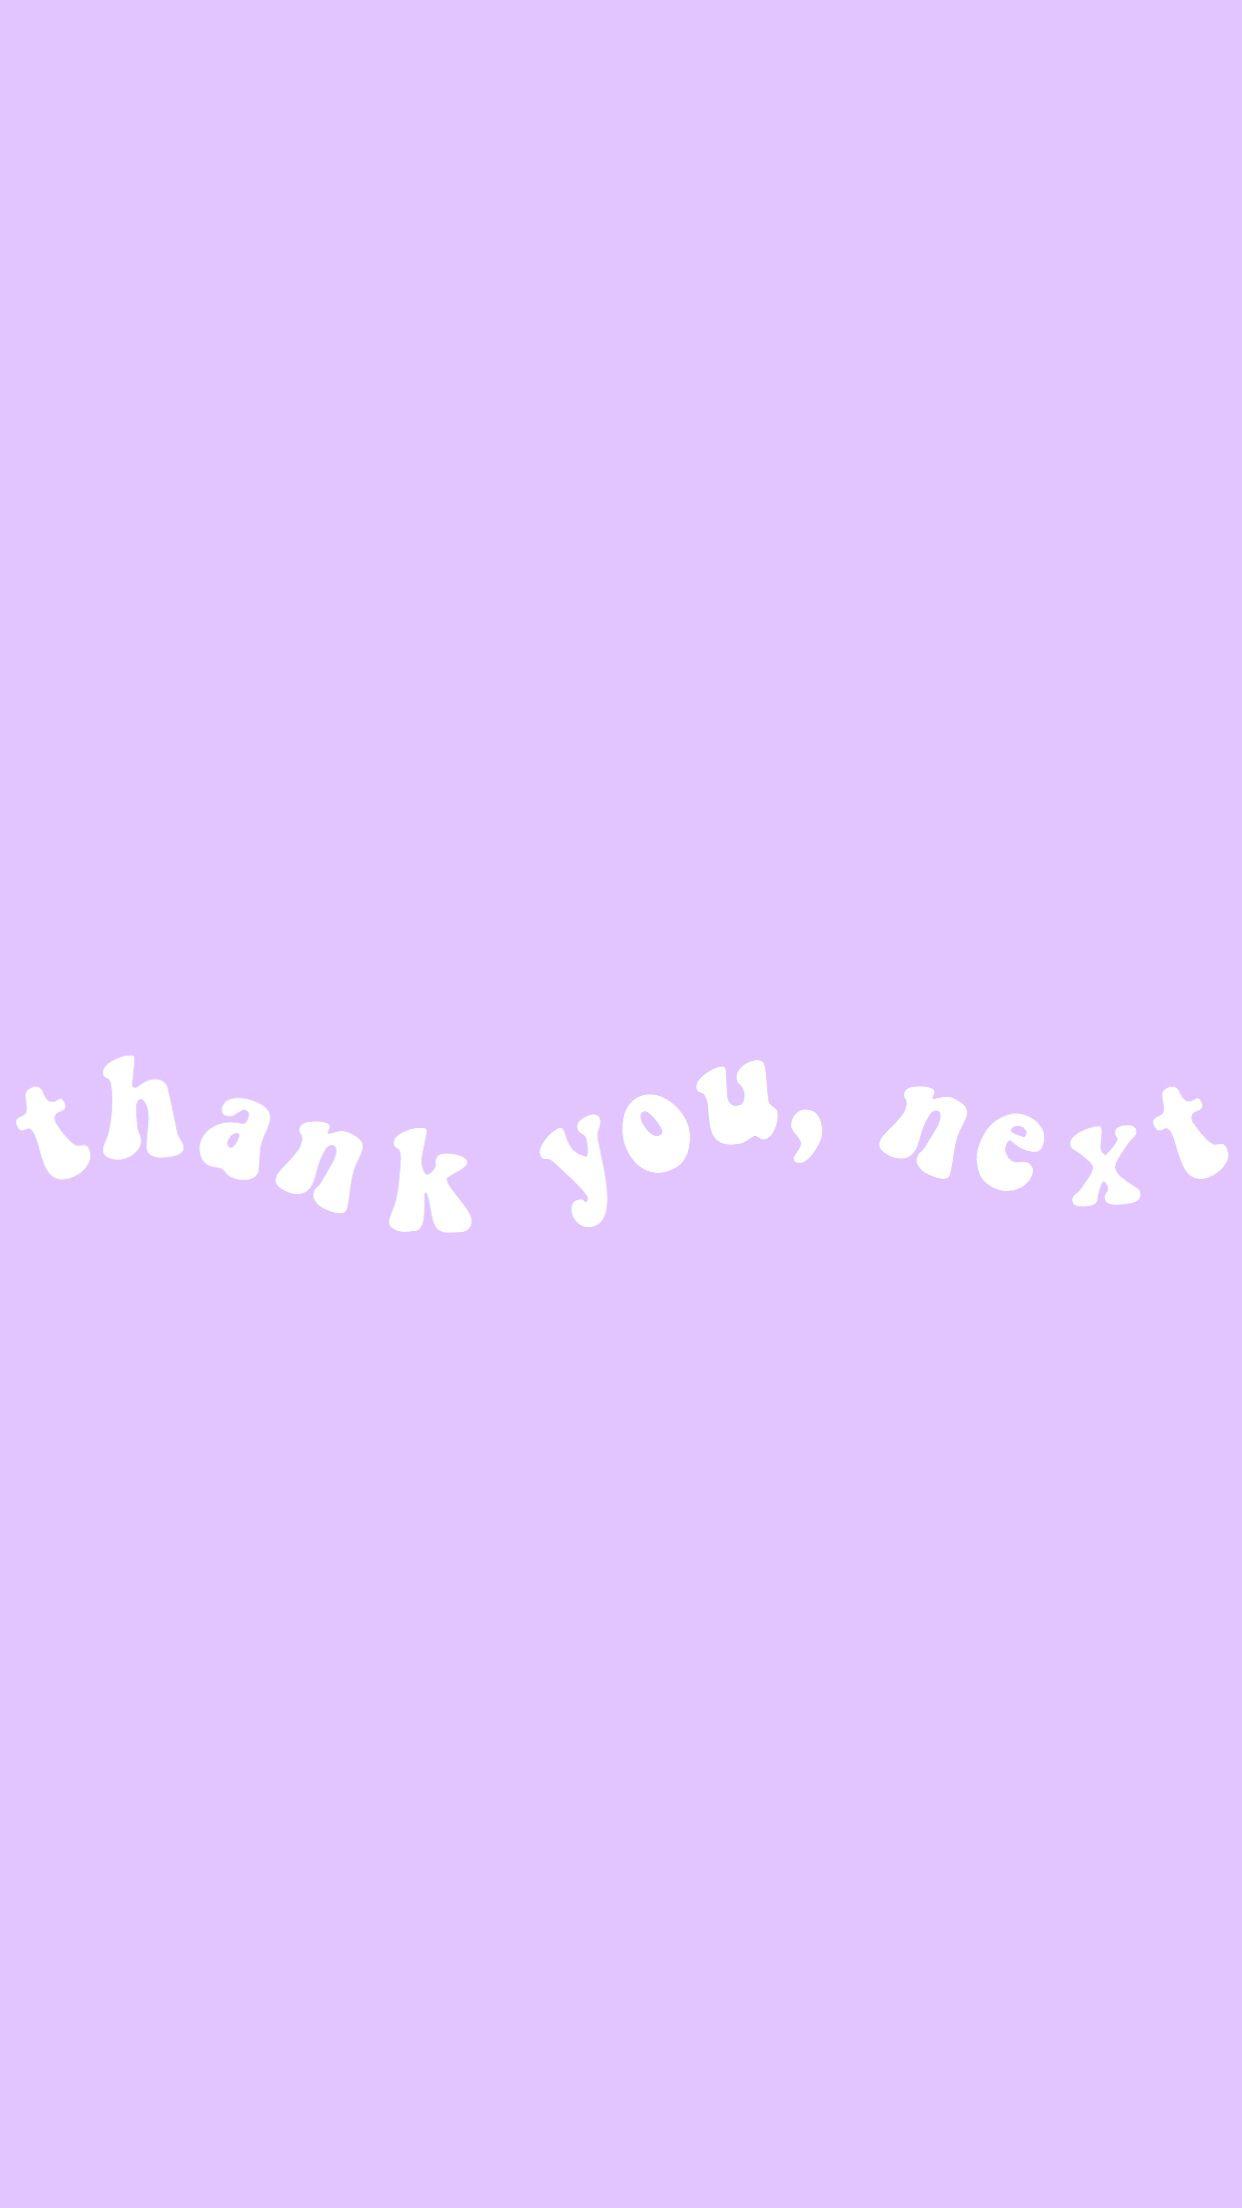 thank you, next. Purple wallpaper iphone, Pink wallpaper iphone, Purple wallpaper